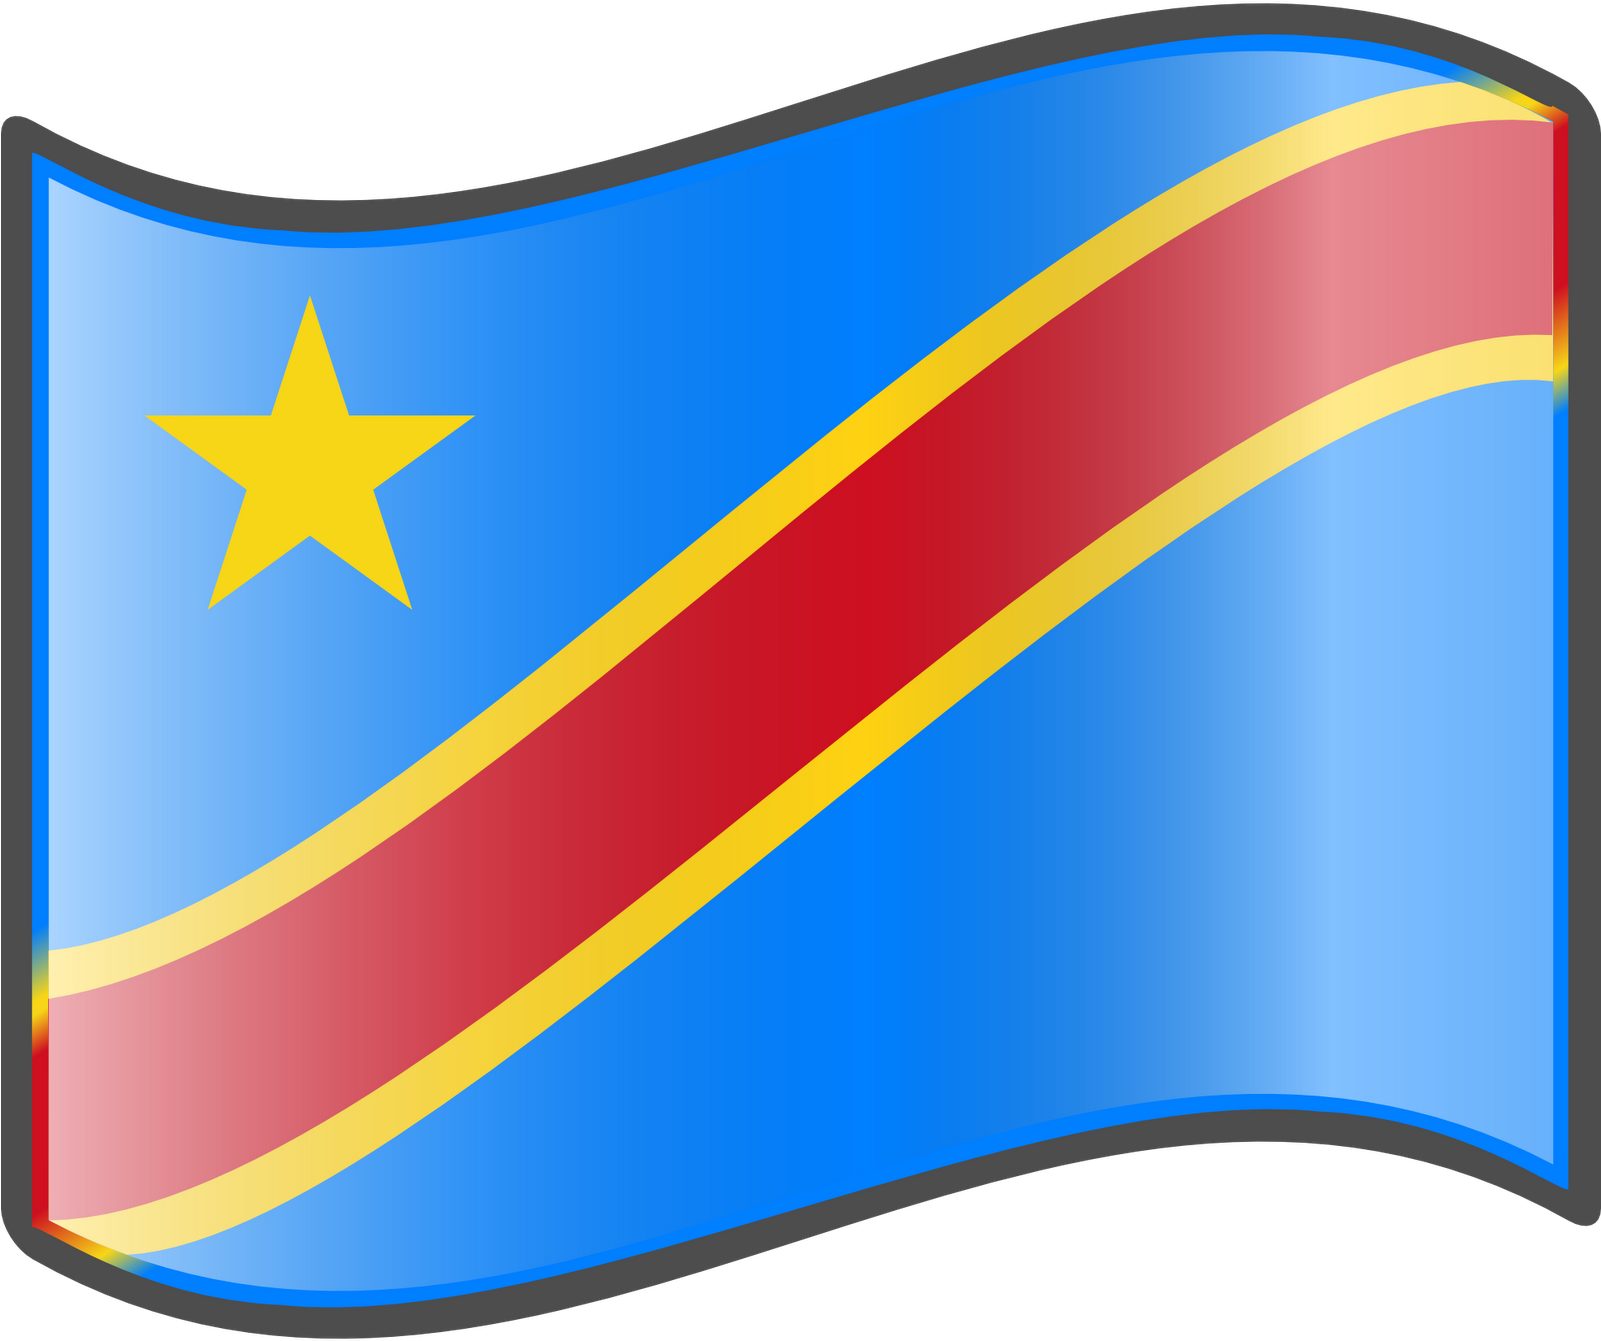 Democratic Republicof Congo Flag Waving PNG image